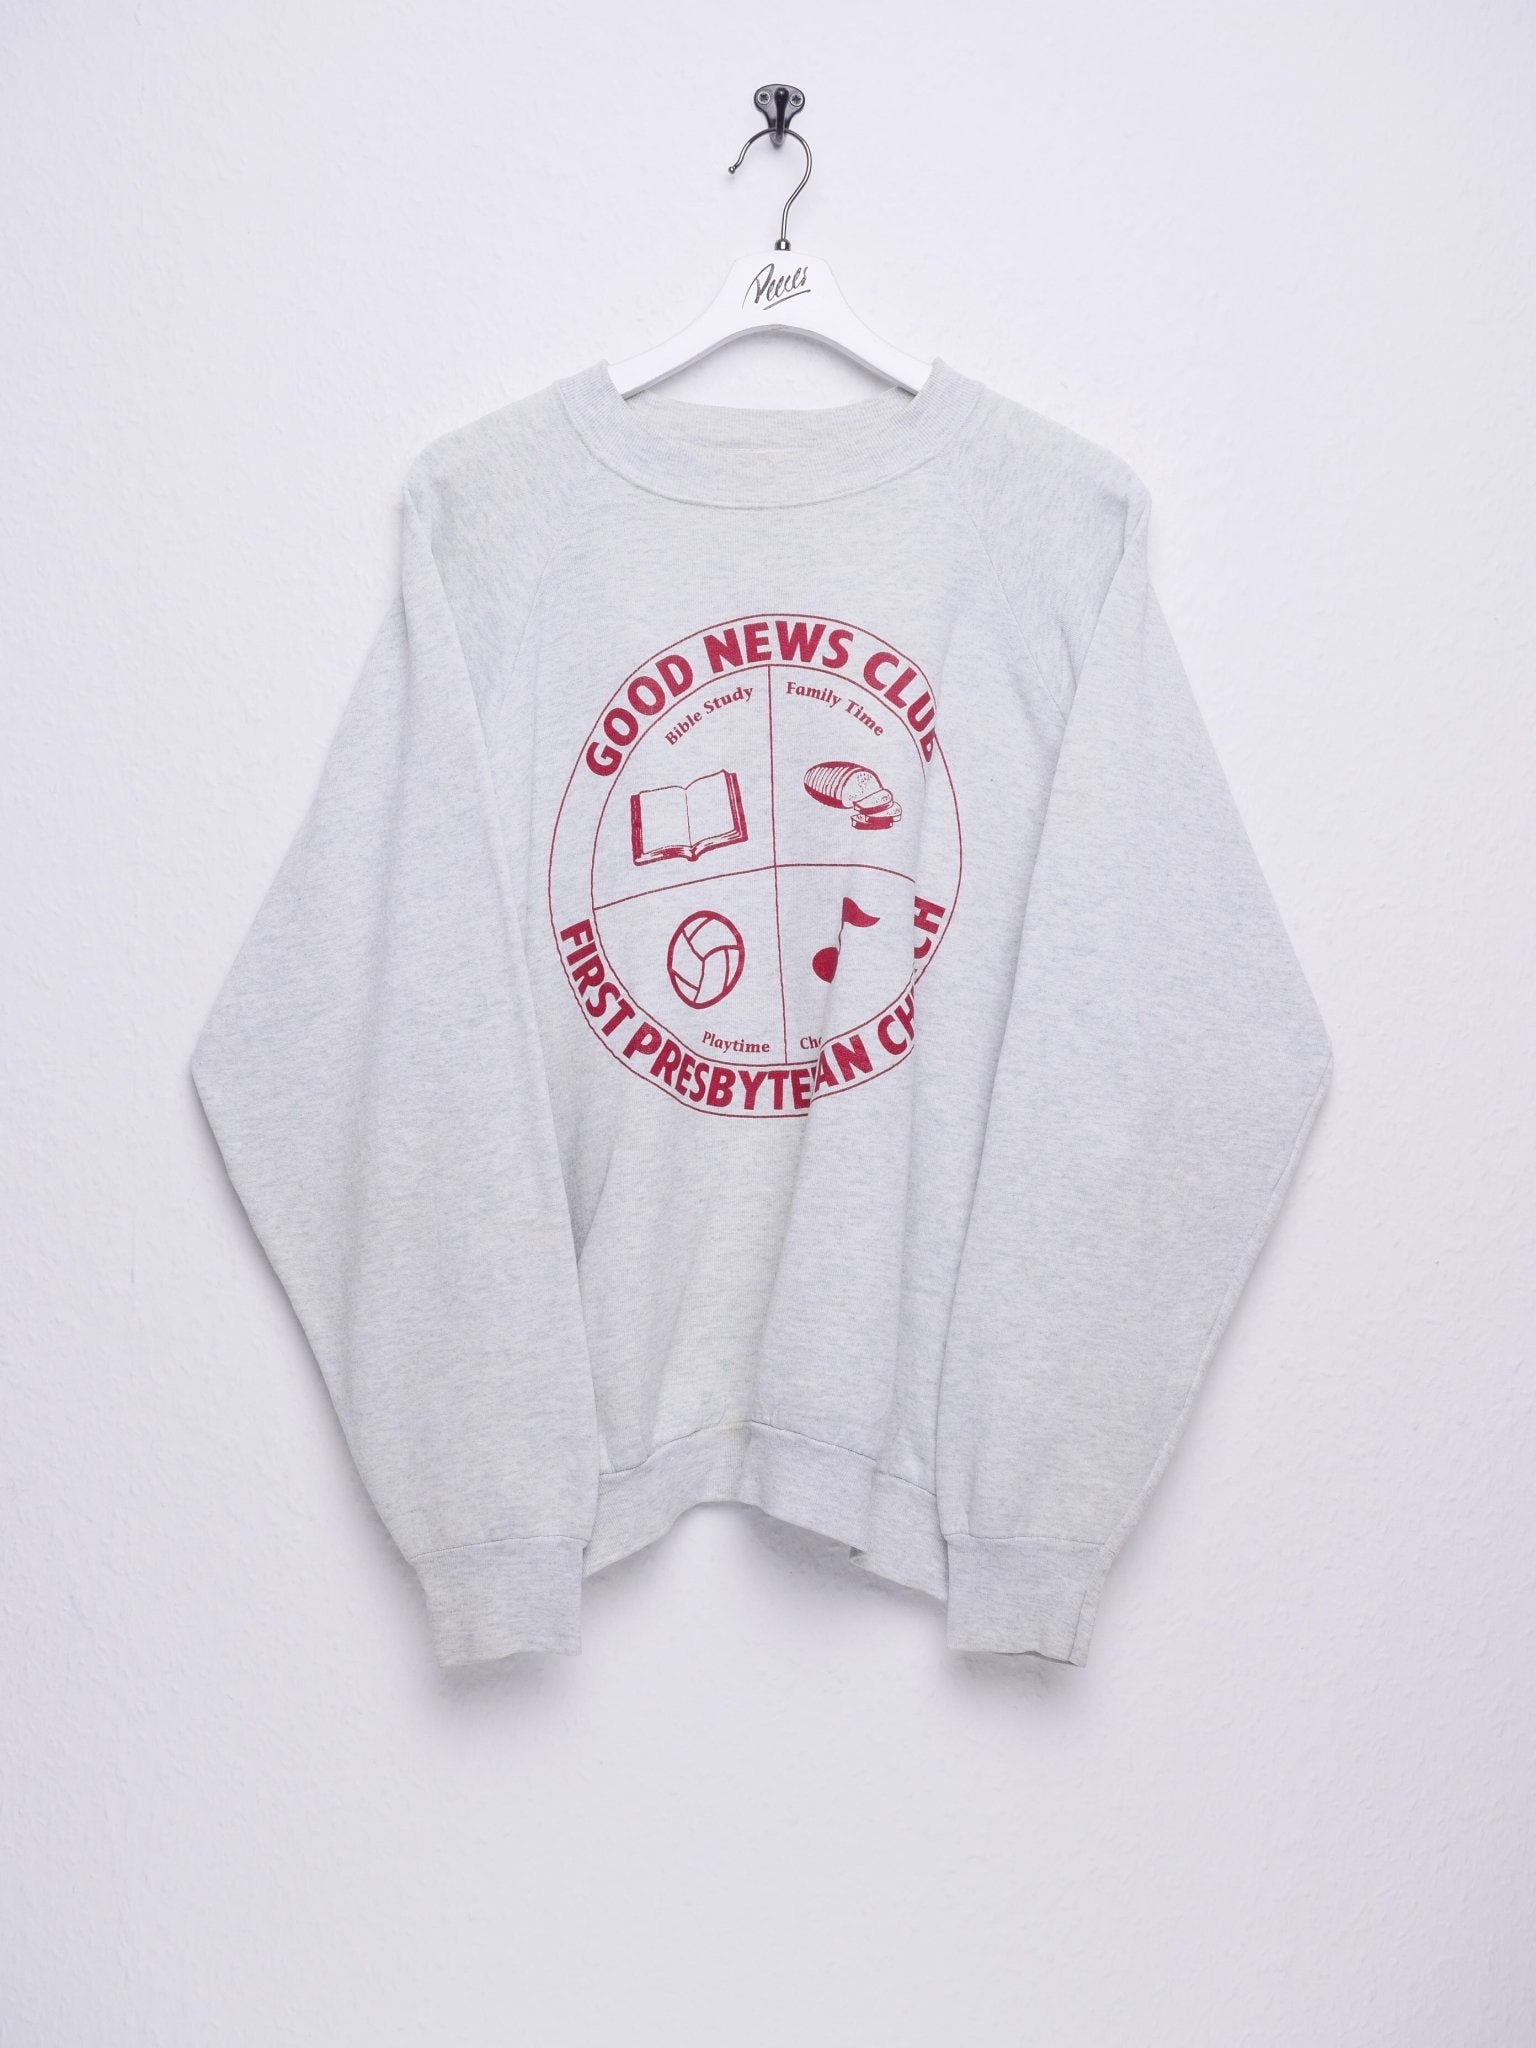 Good news club printed graphic Sweater - Peeces